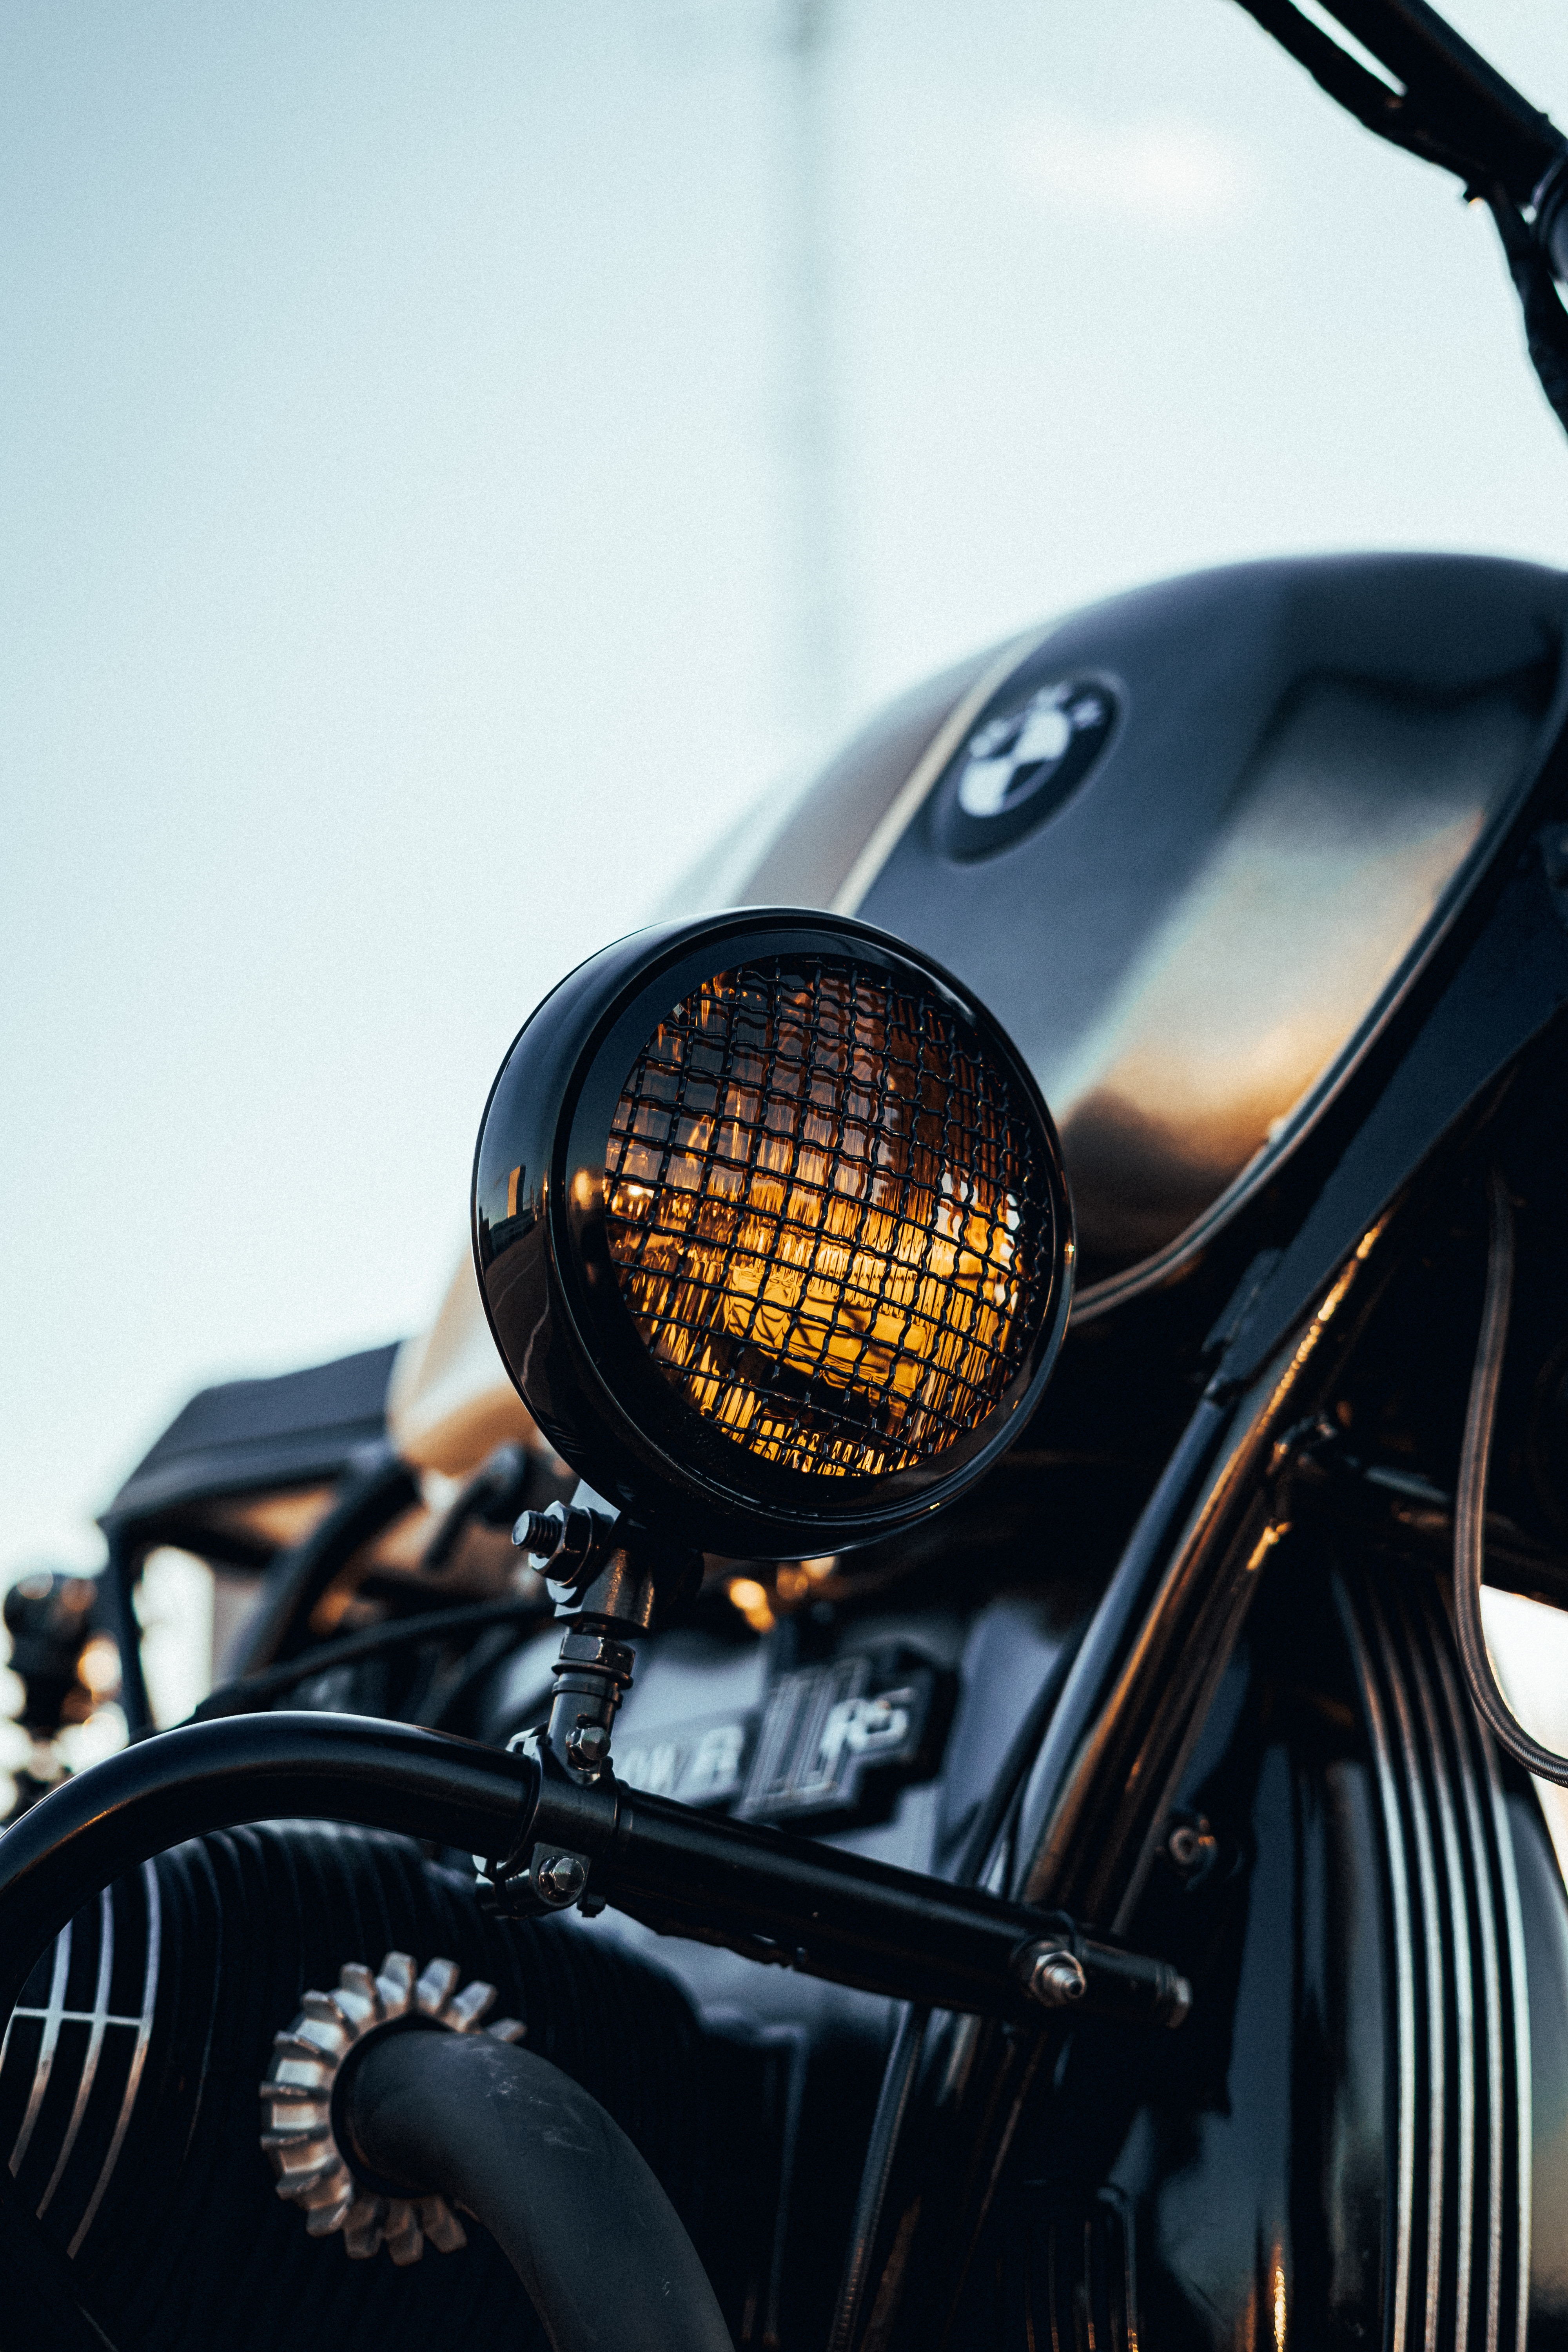 motorcycles, close up, motorcycle, bike, headlight, optics